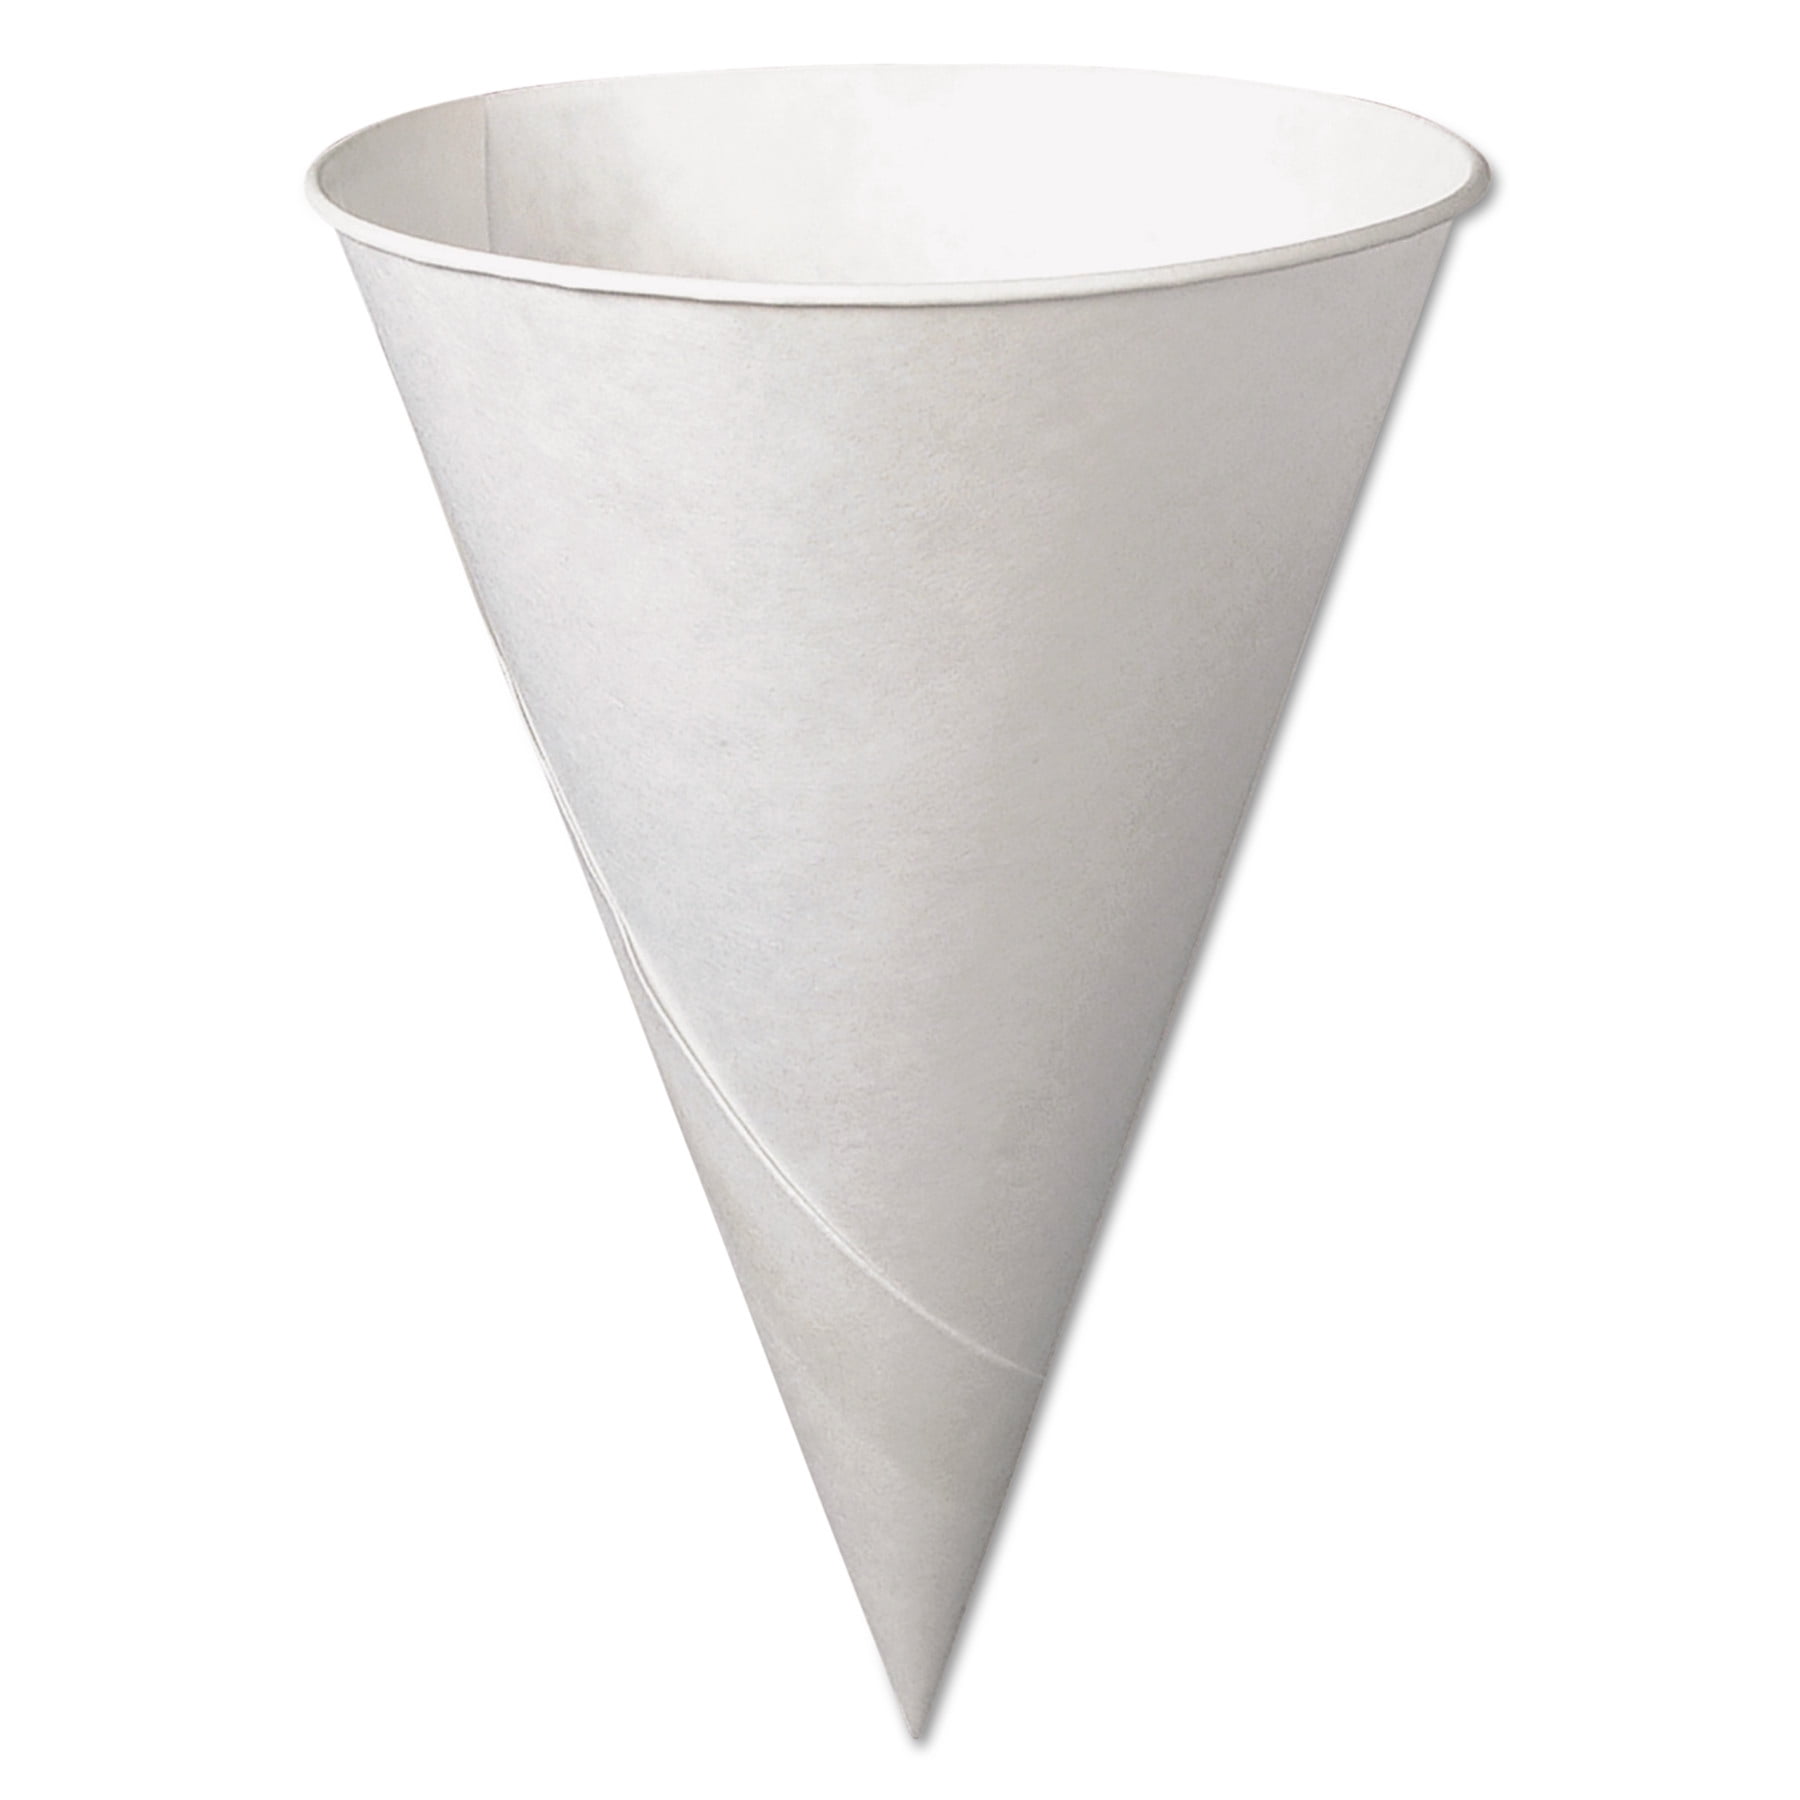 SOLO Cup Company Bare Treated Paper Cone Water Cups, 6 oz., White, 200